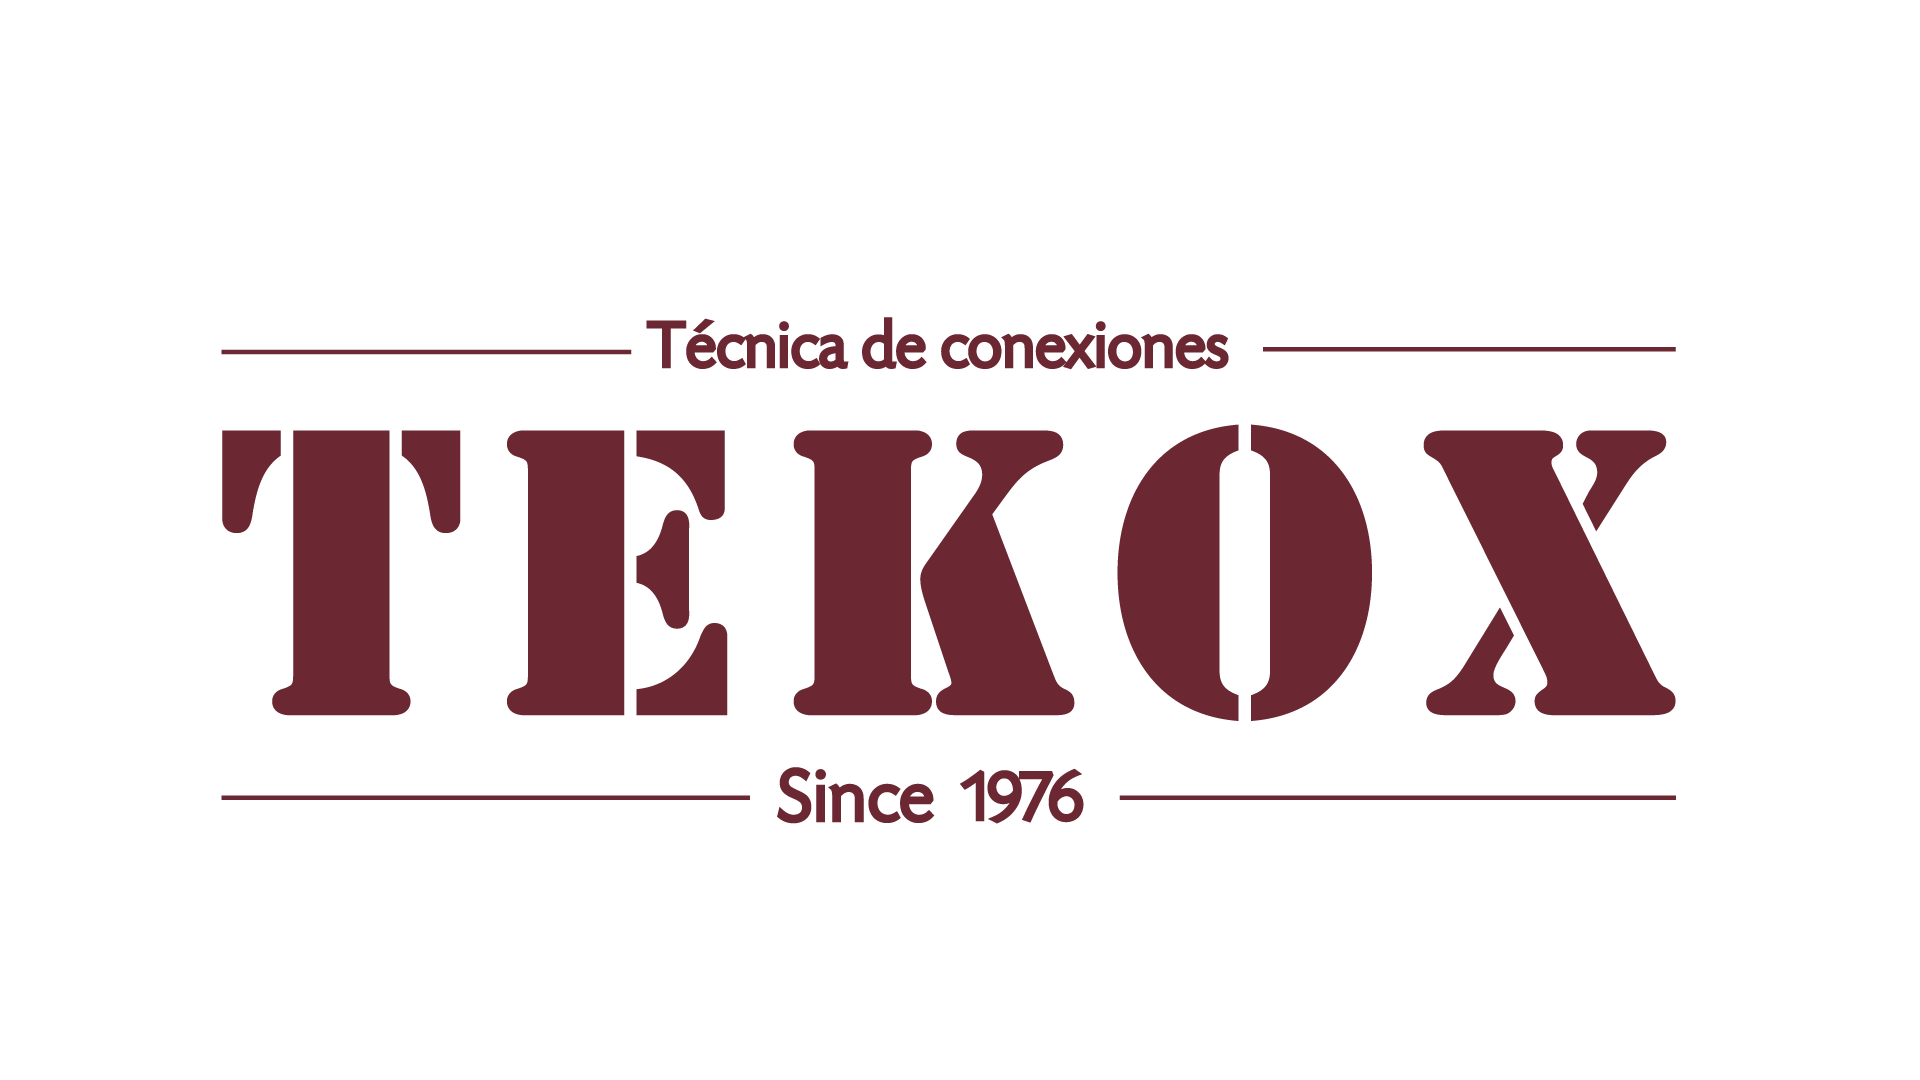 Tekox